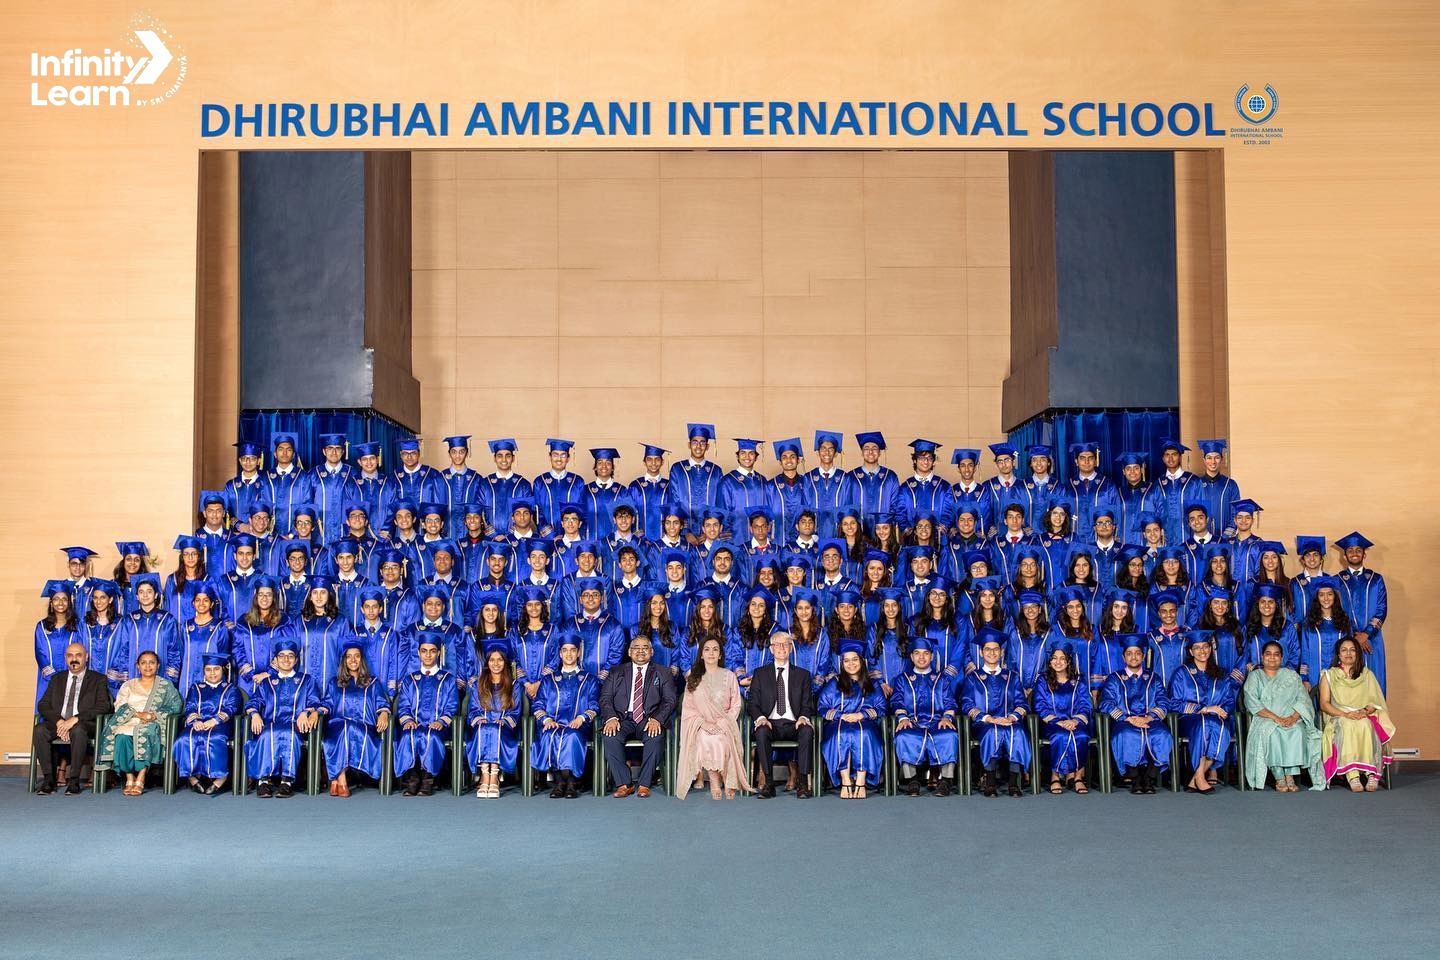 Dirubhai Ambani International School